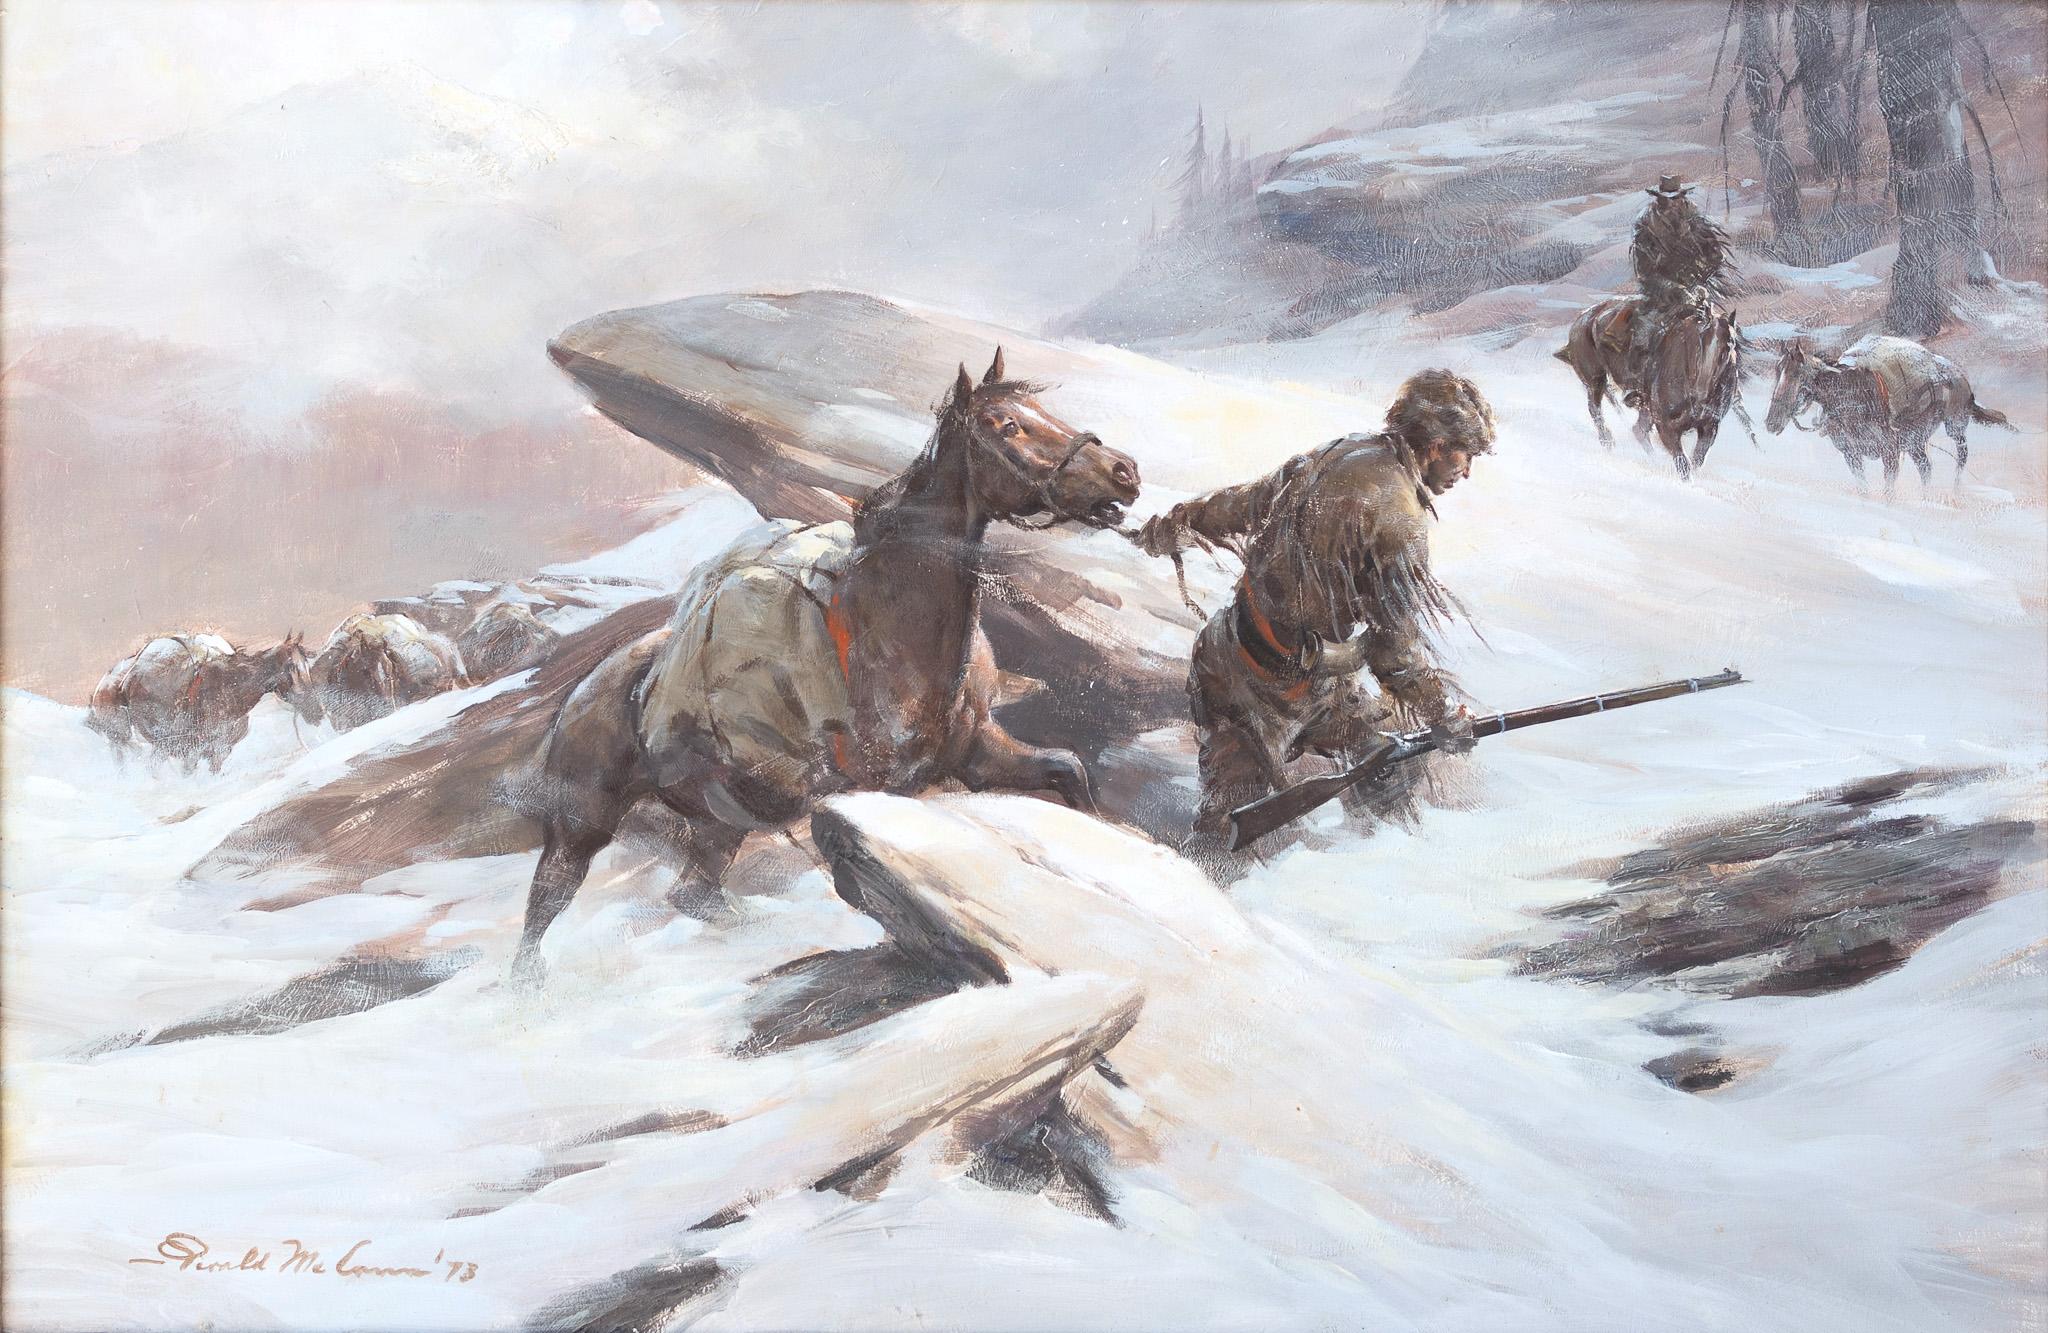 Figurative Painting Gerald McCann - « Searching for Shelter » American Frontier, scène Blizzard d'hiver, cheval de neige froid